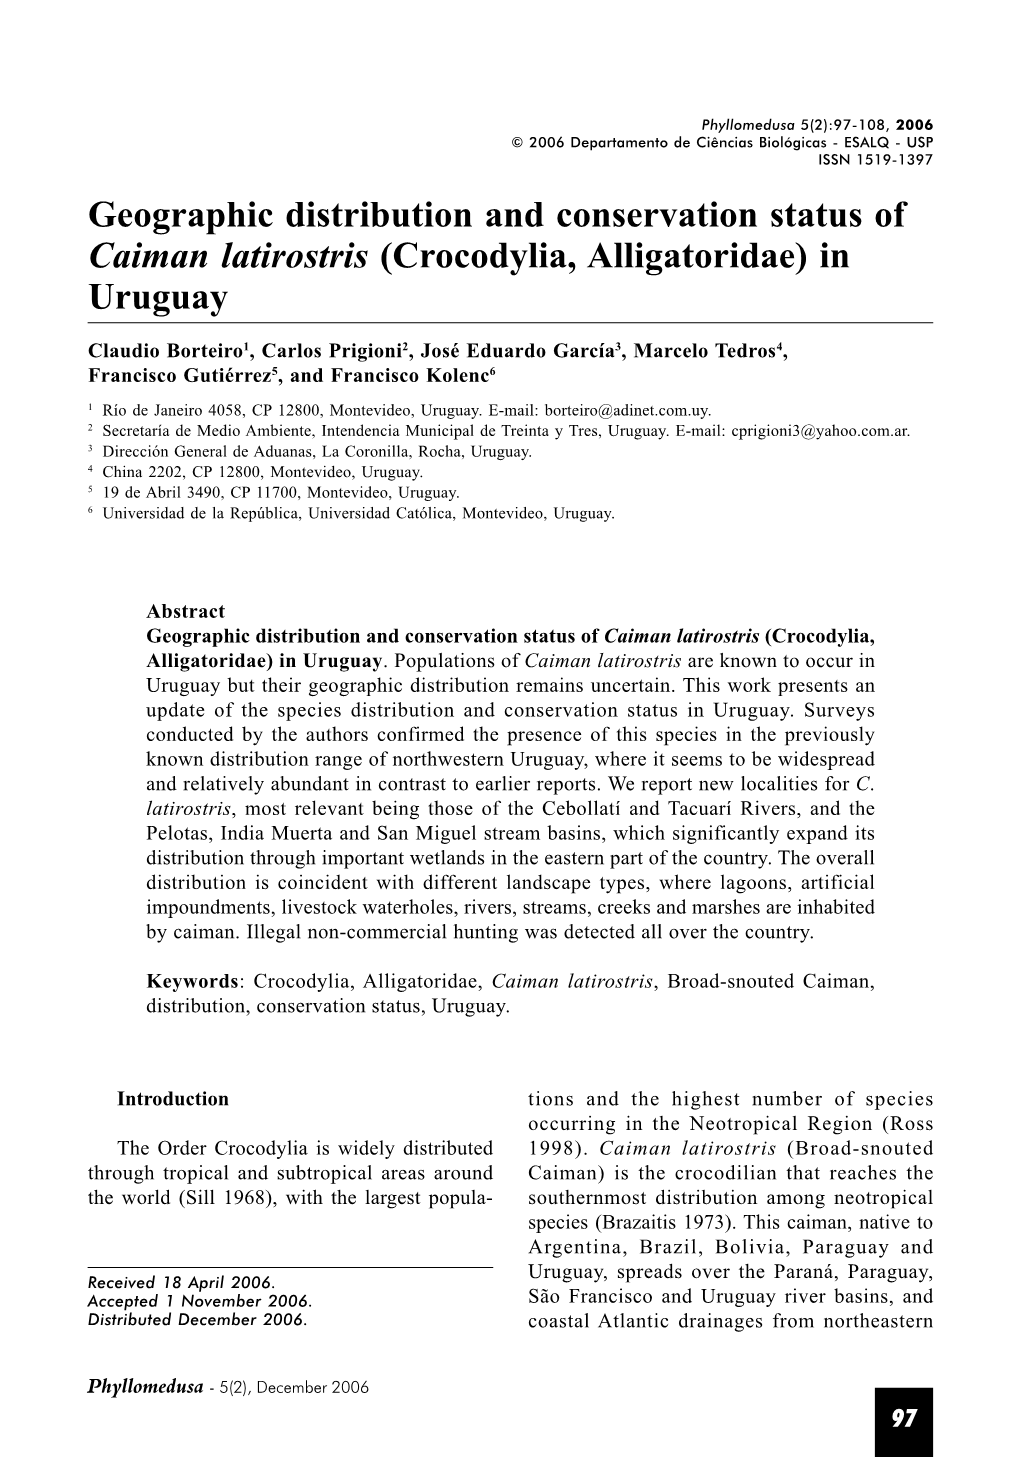 Geographic Distribution and Conservation Status of Caiman Latirostris (Crocodylia, Alligatoridae) in Uruguay